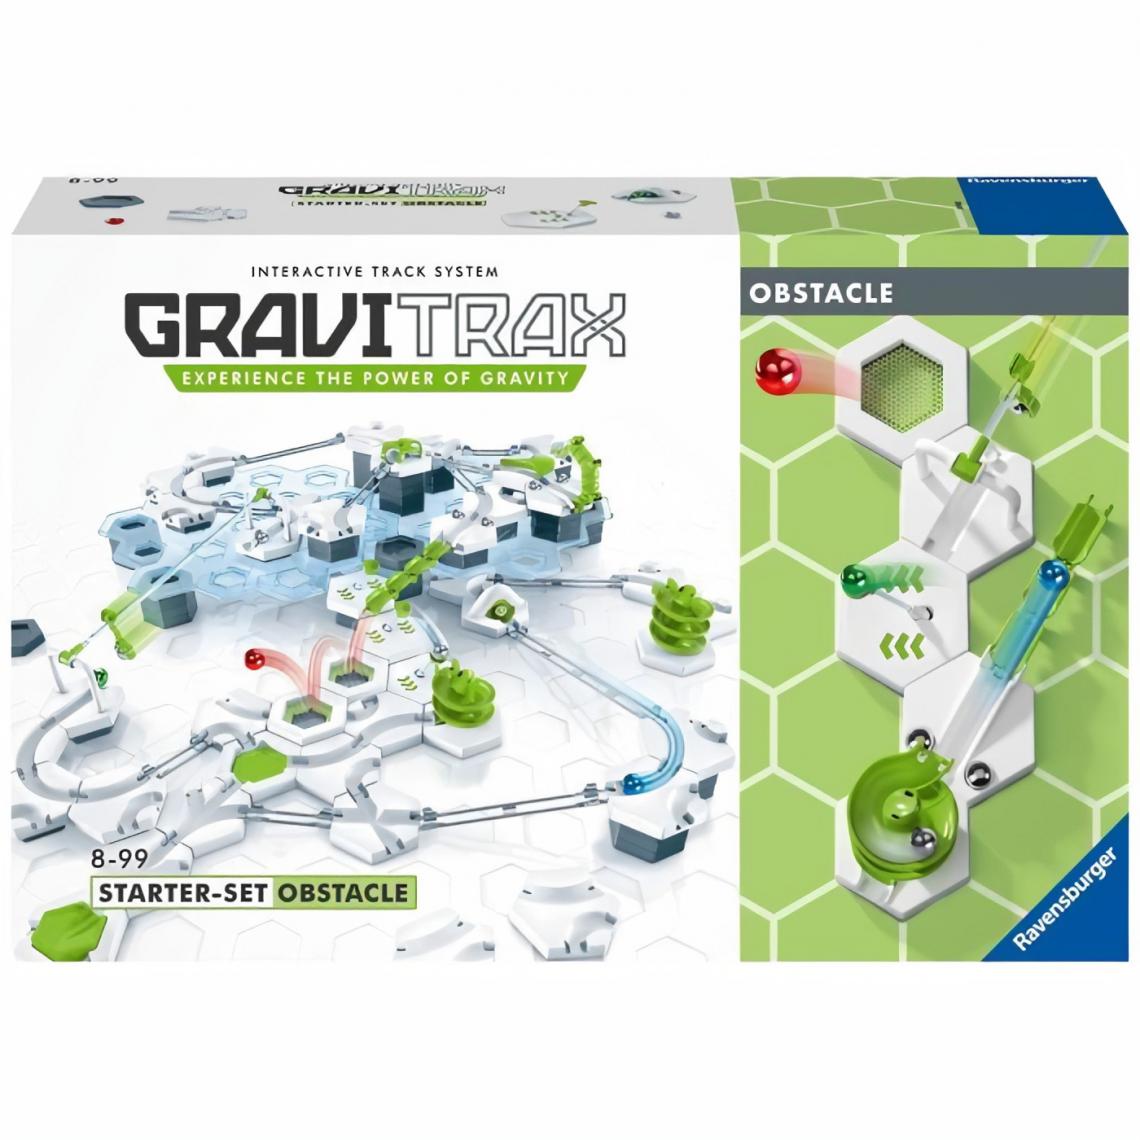 Ravensburger - Ravensburger - GraviTrax Starter Set Obstacle - 4005556268665 - Briques et blocs